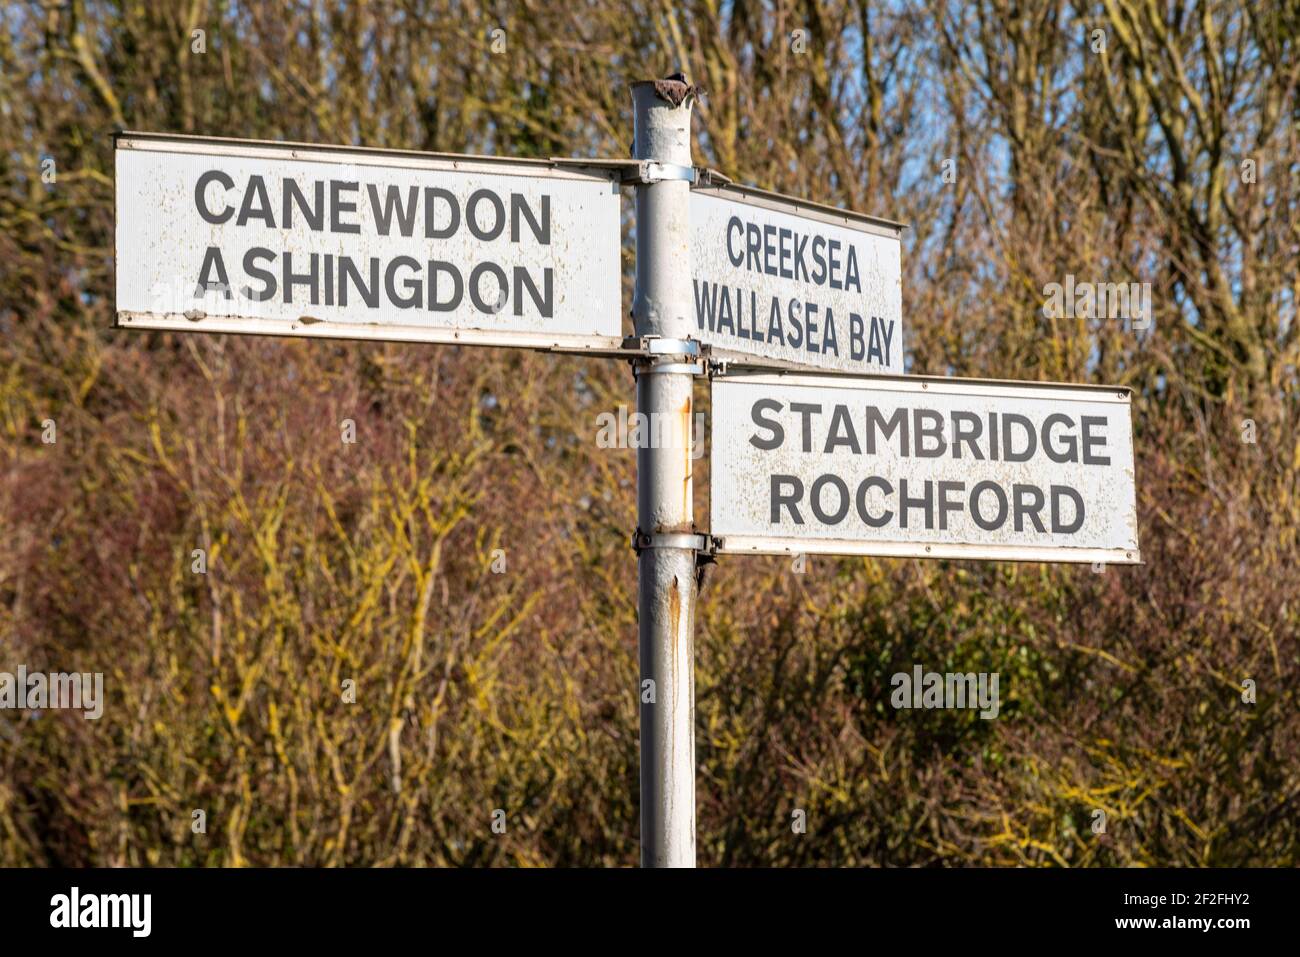 Old road destination sign in Ballards Gore, Stambridge, Essex, UK, with routes to Rochford, Canewdon, Ashingdon, Stambridge, Creeksea, Wallasea Bay Stock Photo